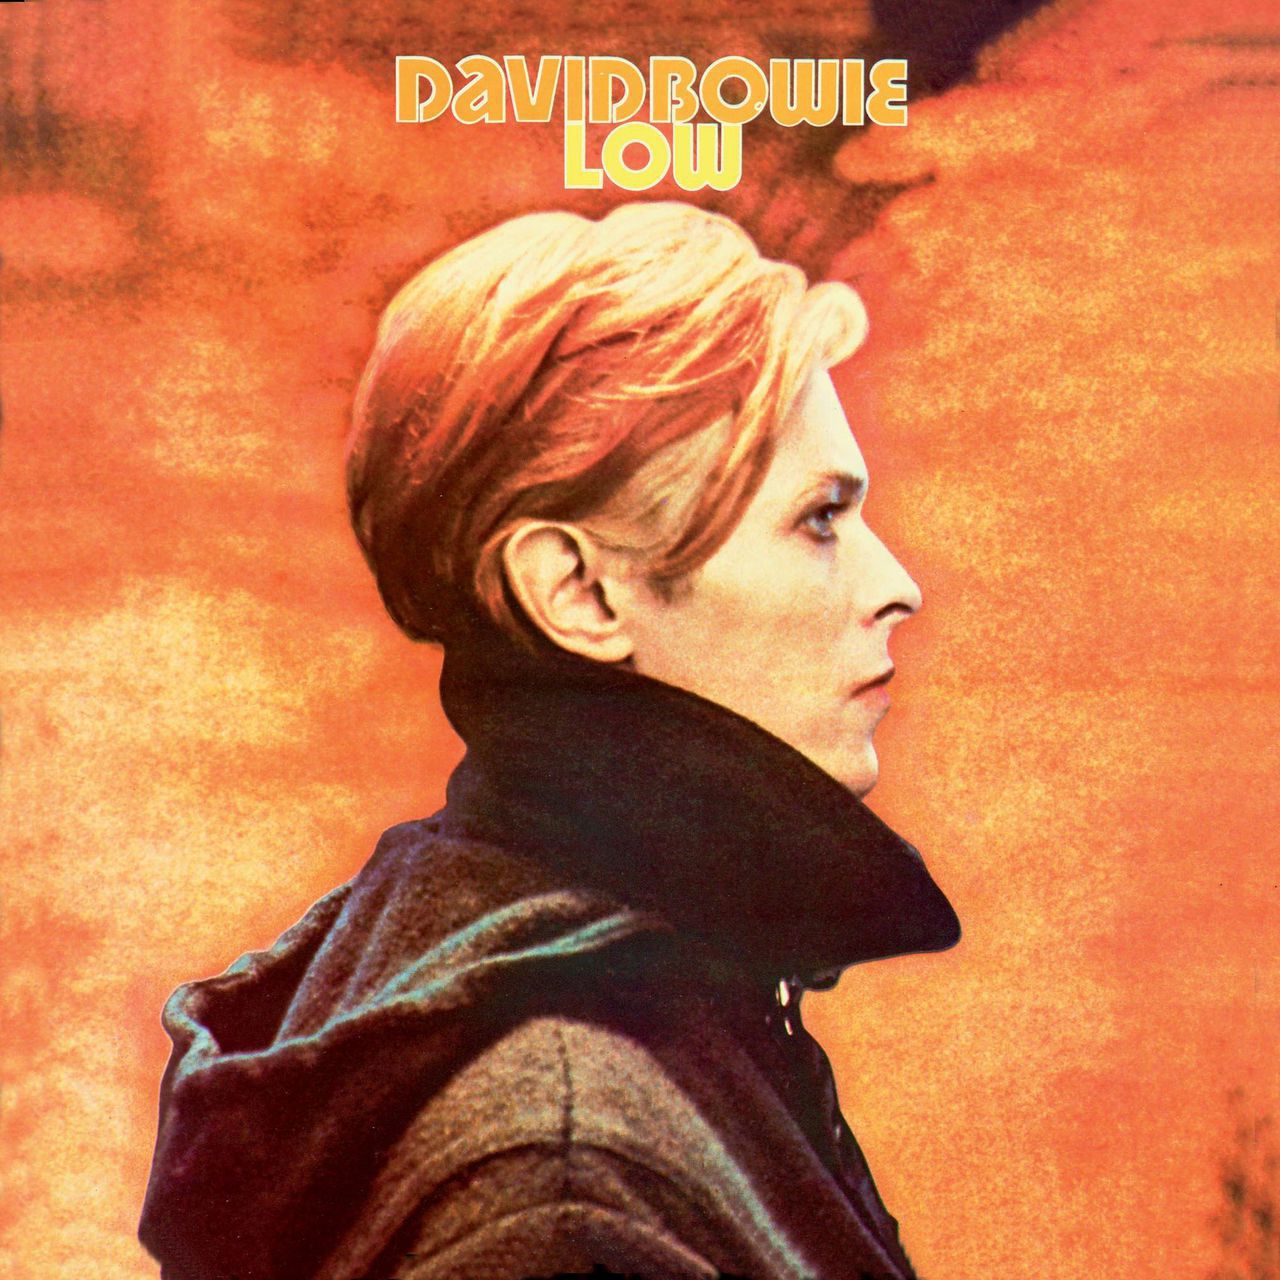 David Bowie - Low Vinil - Salvaje Music Store MEXICO